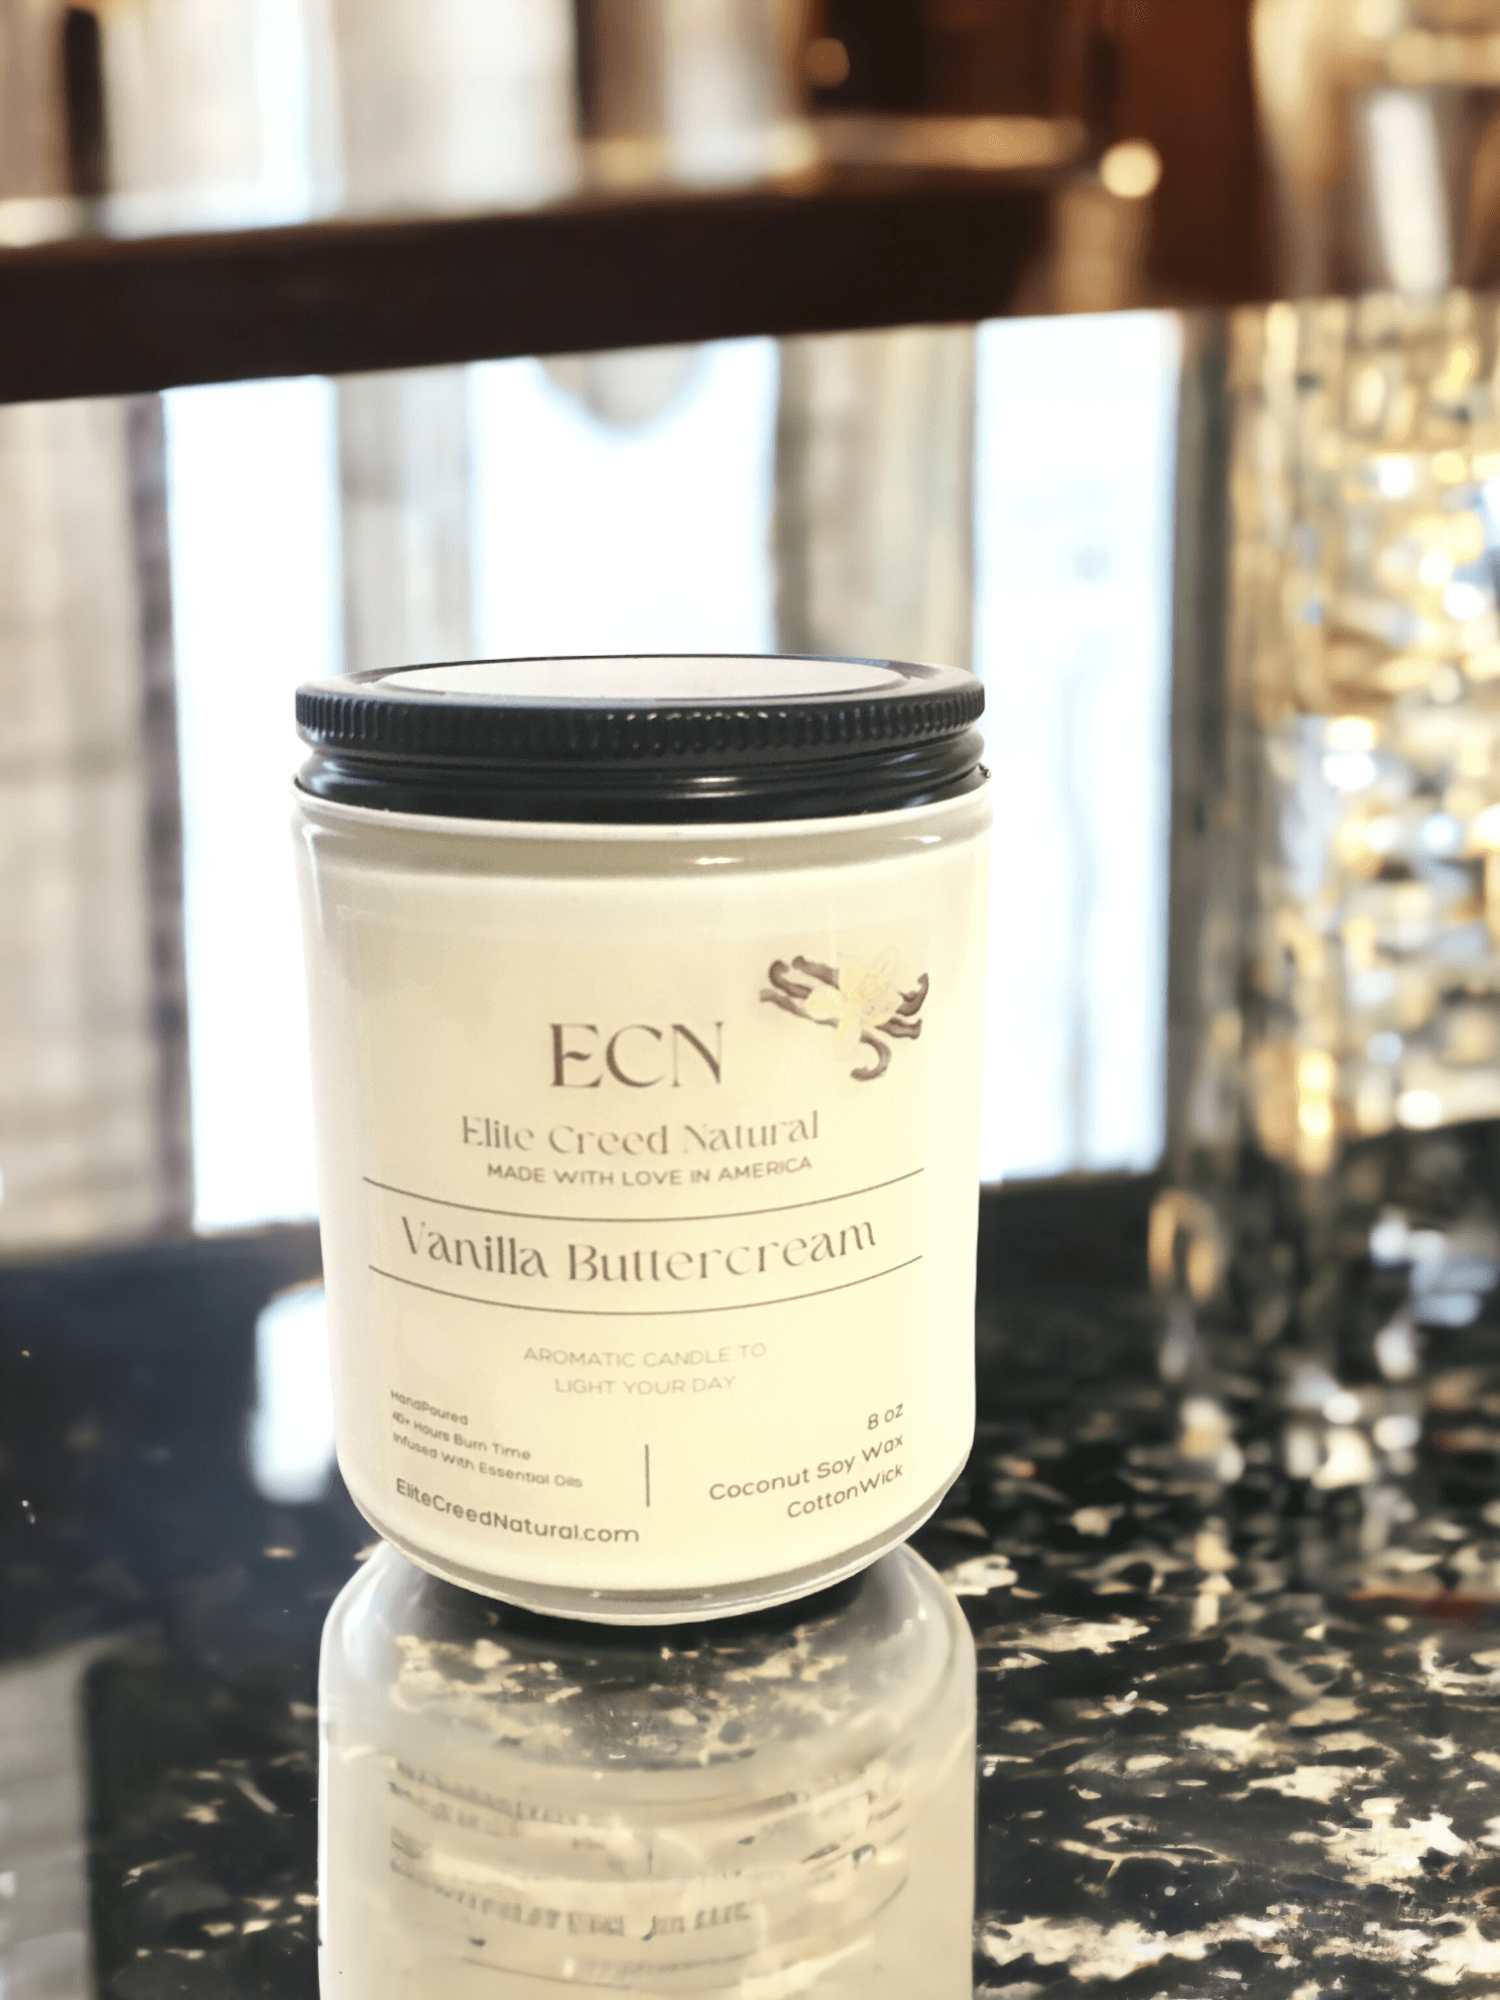 Vanilla Buttercream Candle - Elite Creed Natural